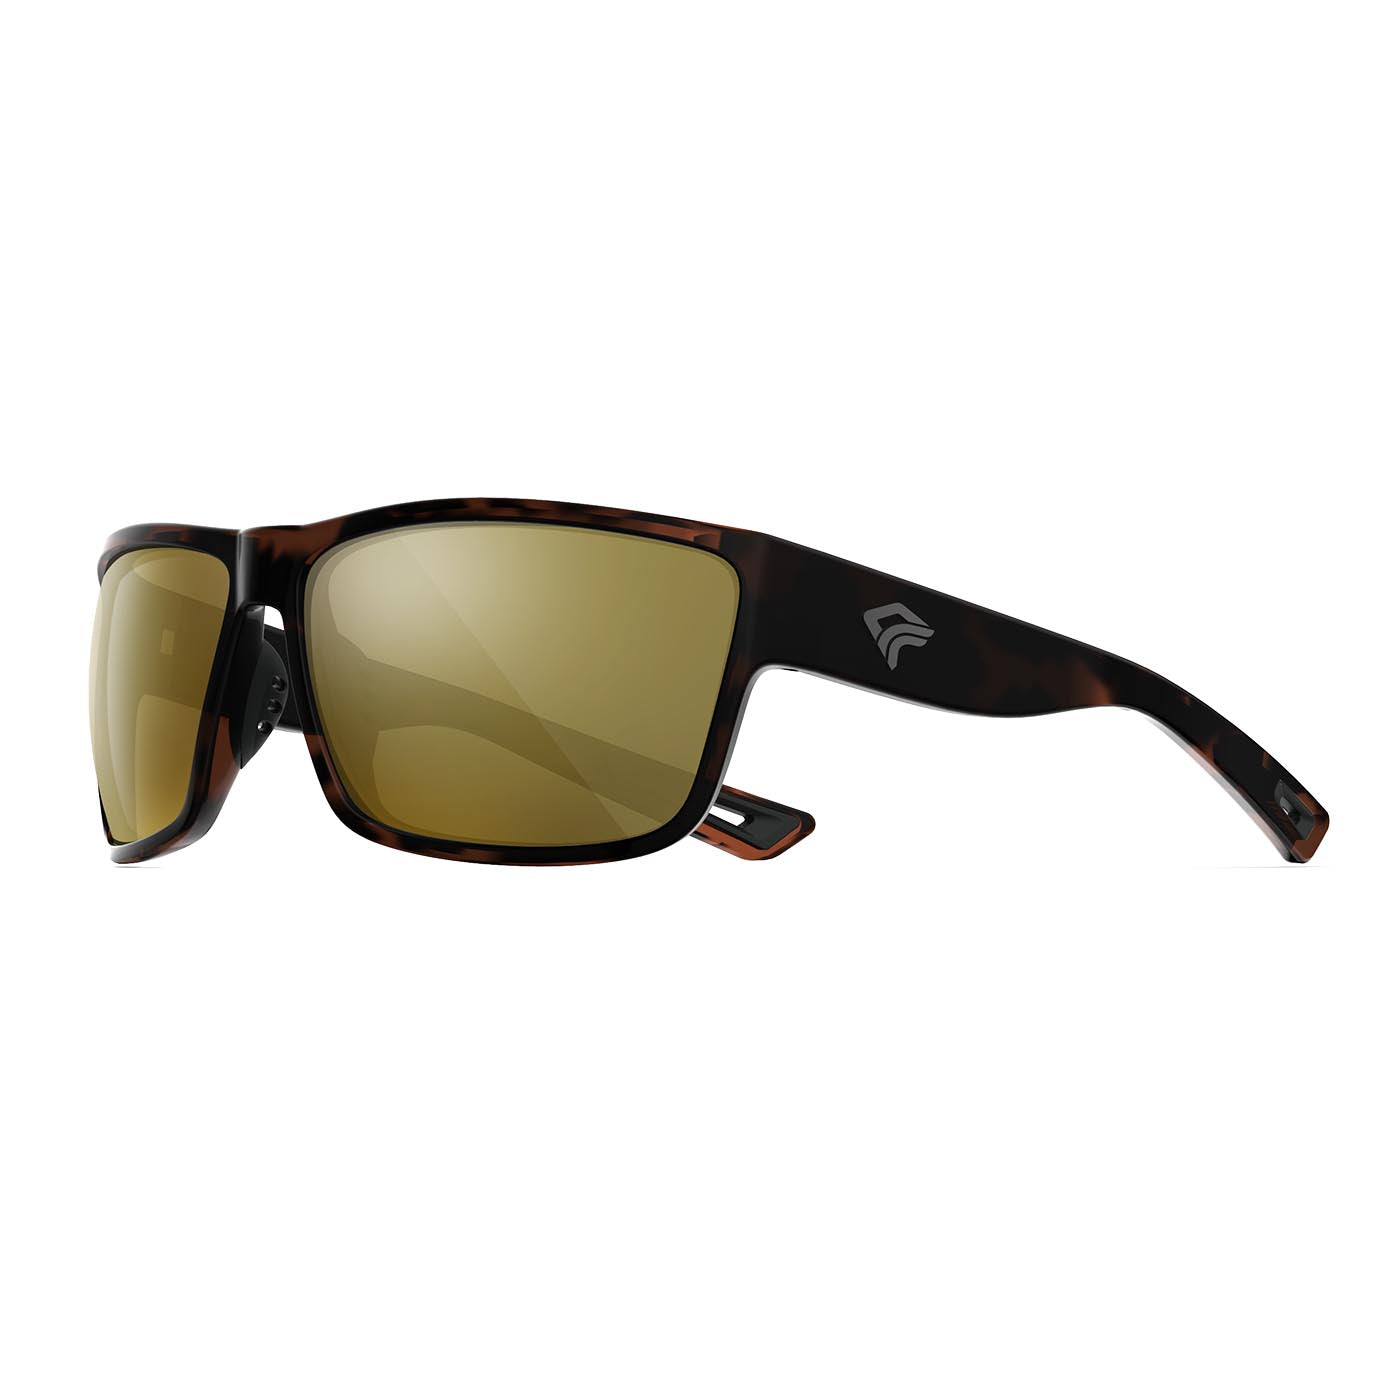 GetUSCart- TOREGE Polarized Sports Sunglasses with 5